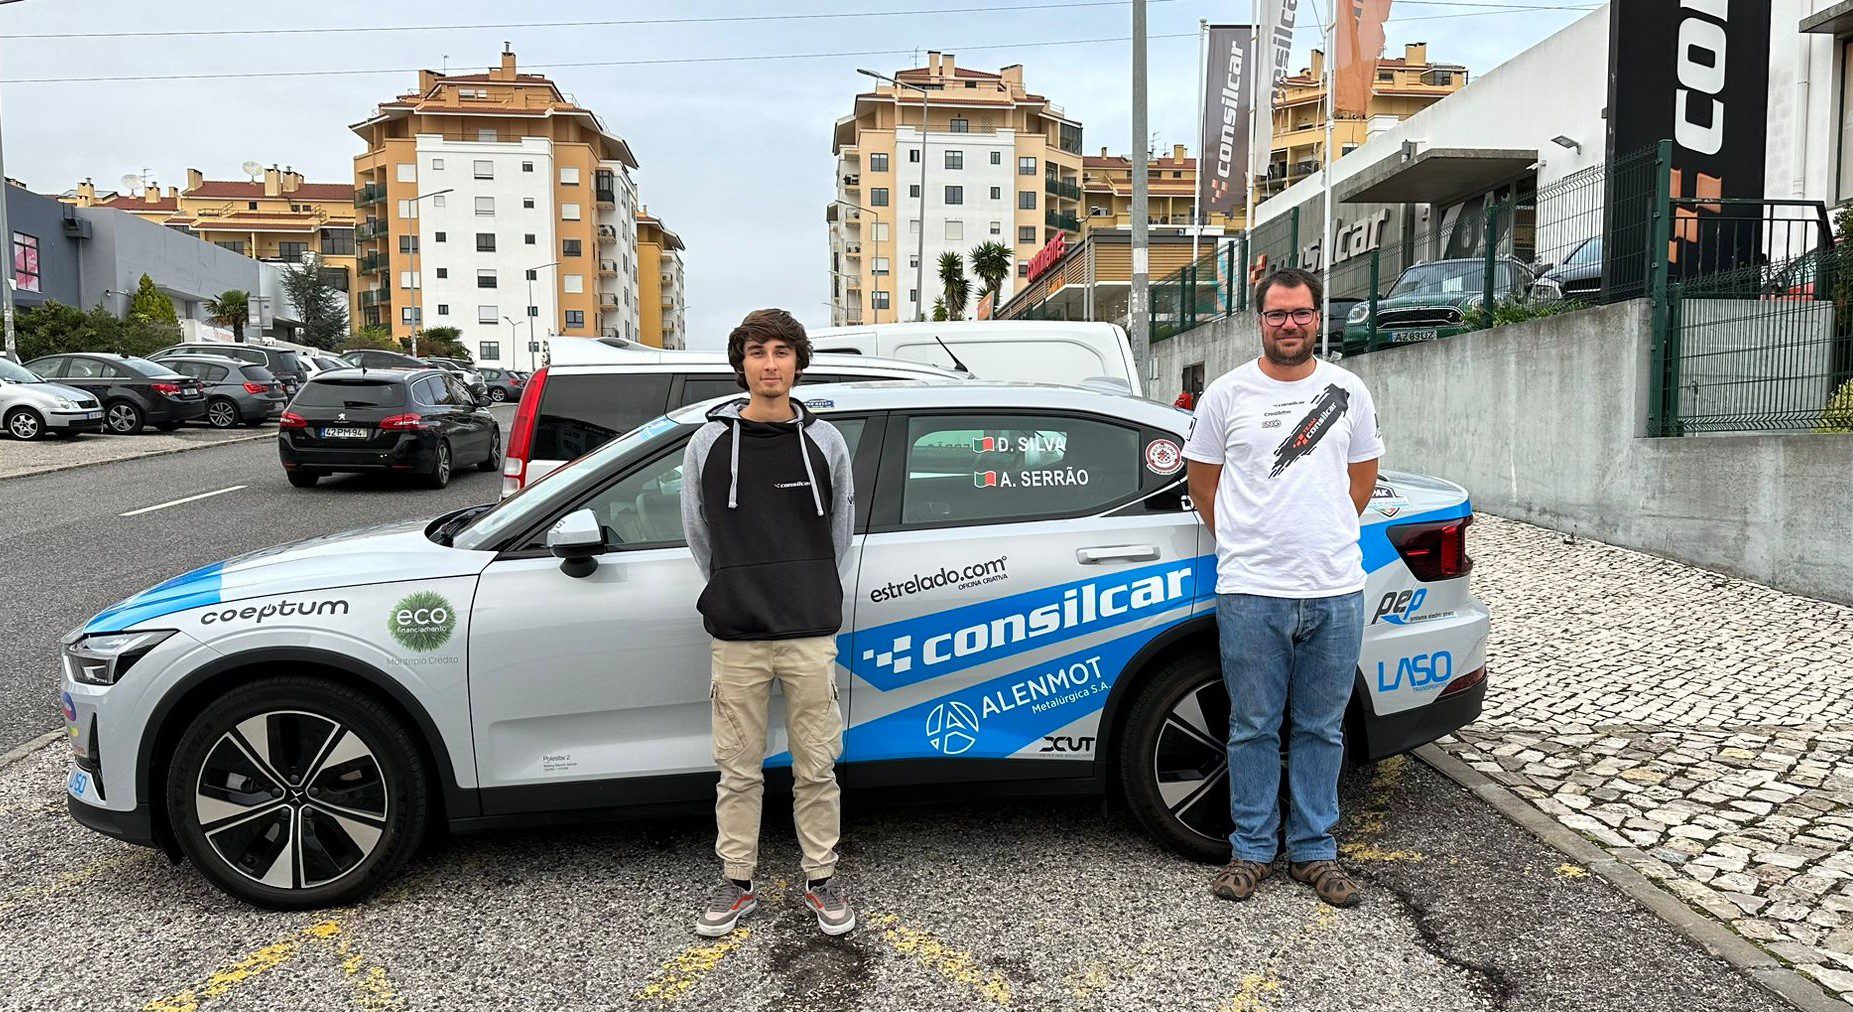 Team Consilcar sobe ao pódio no Camélias Classic Rally